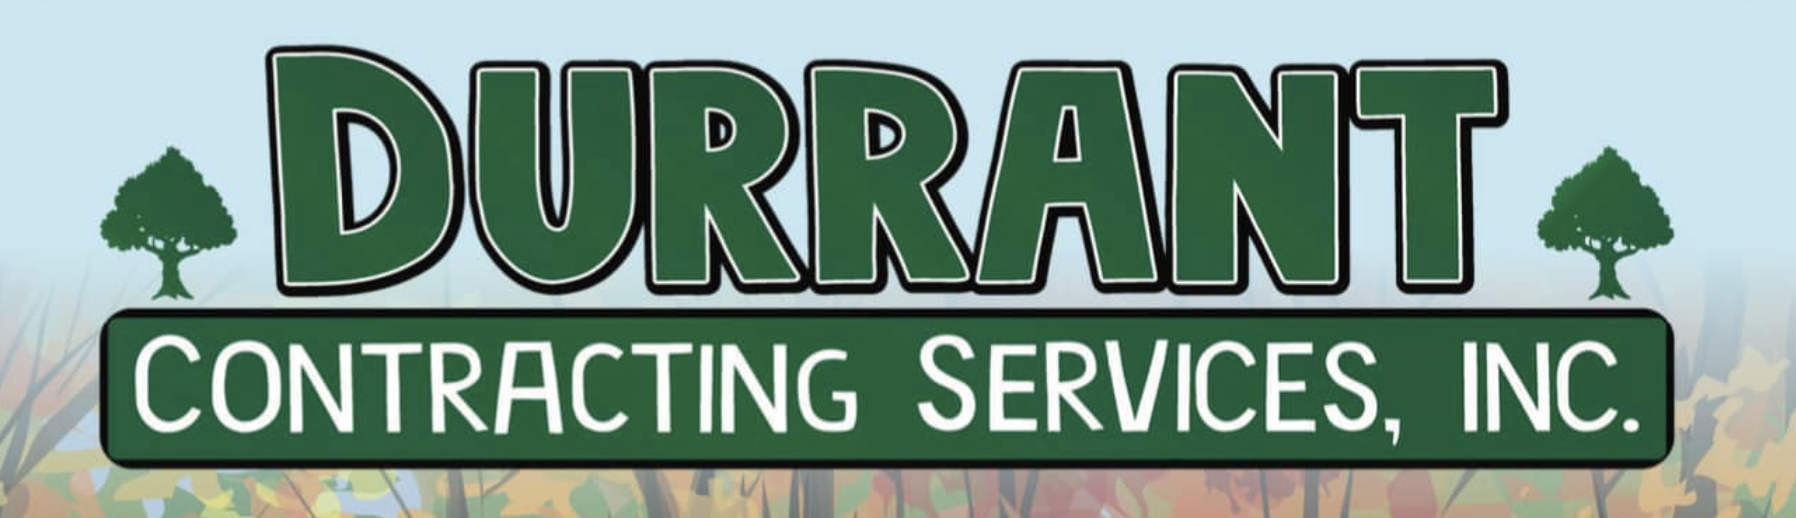 Durrant Contracting Service, Inc.